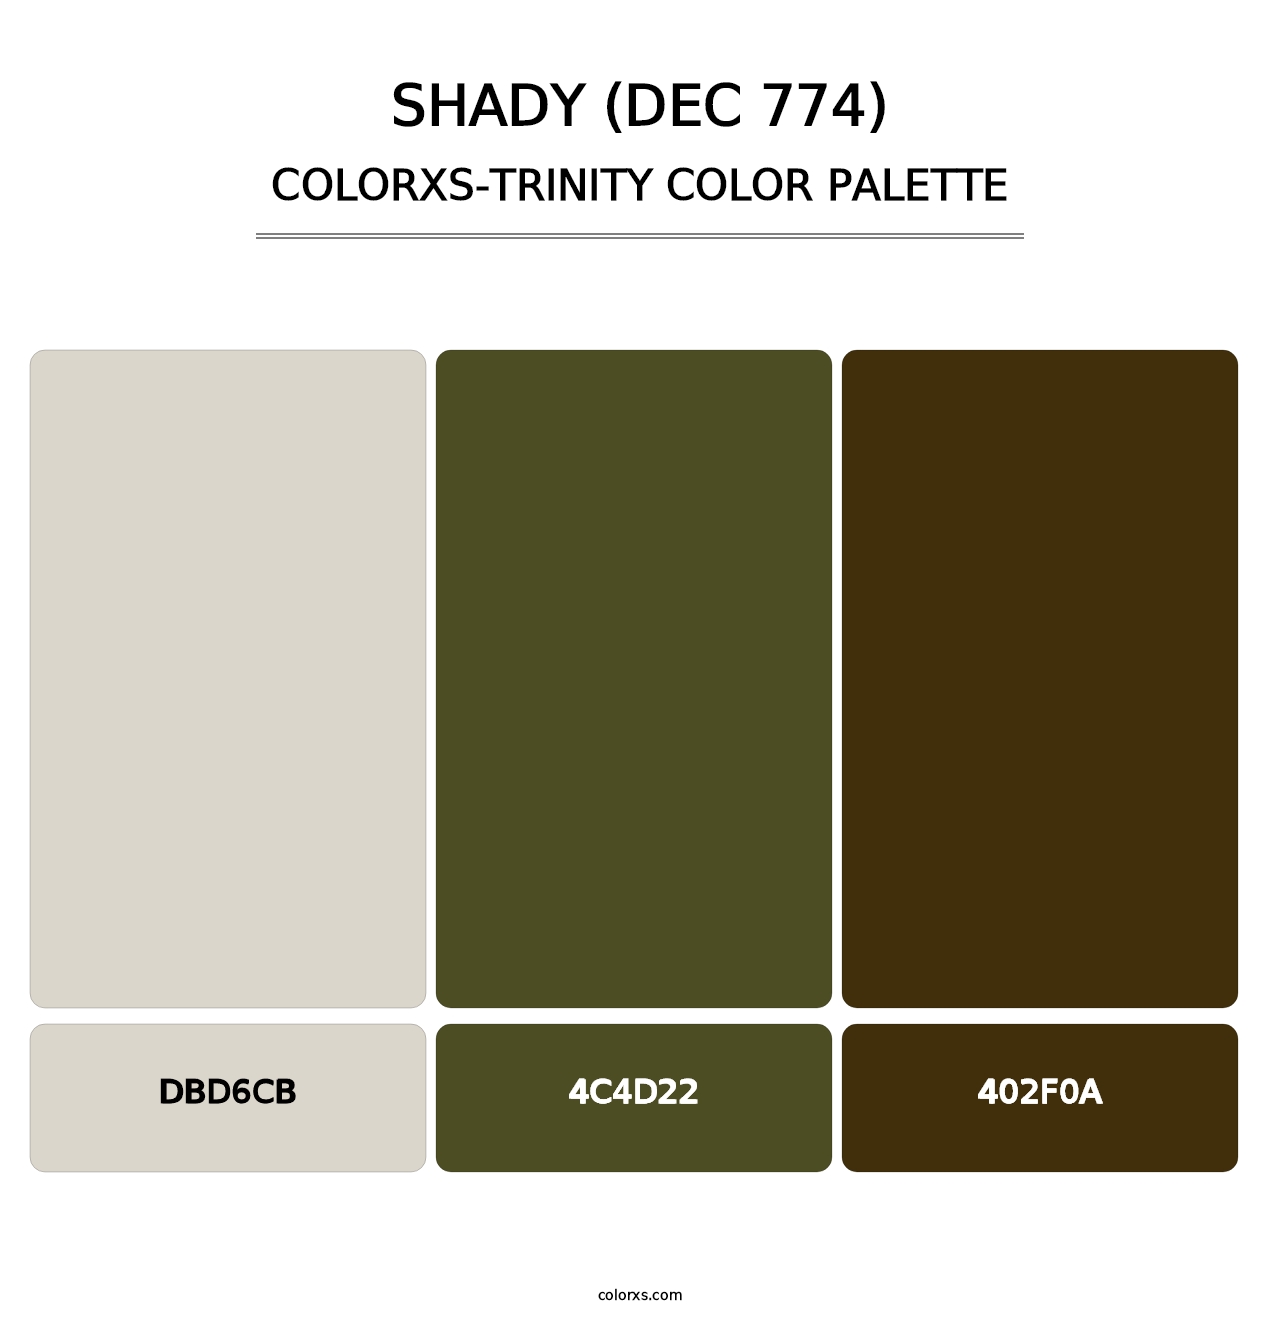 Shady (DEC 774) - Colorxs Trinity Palette